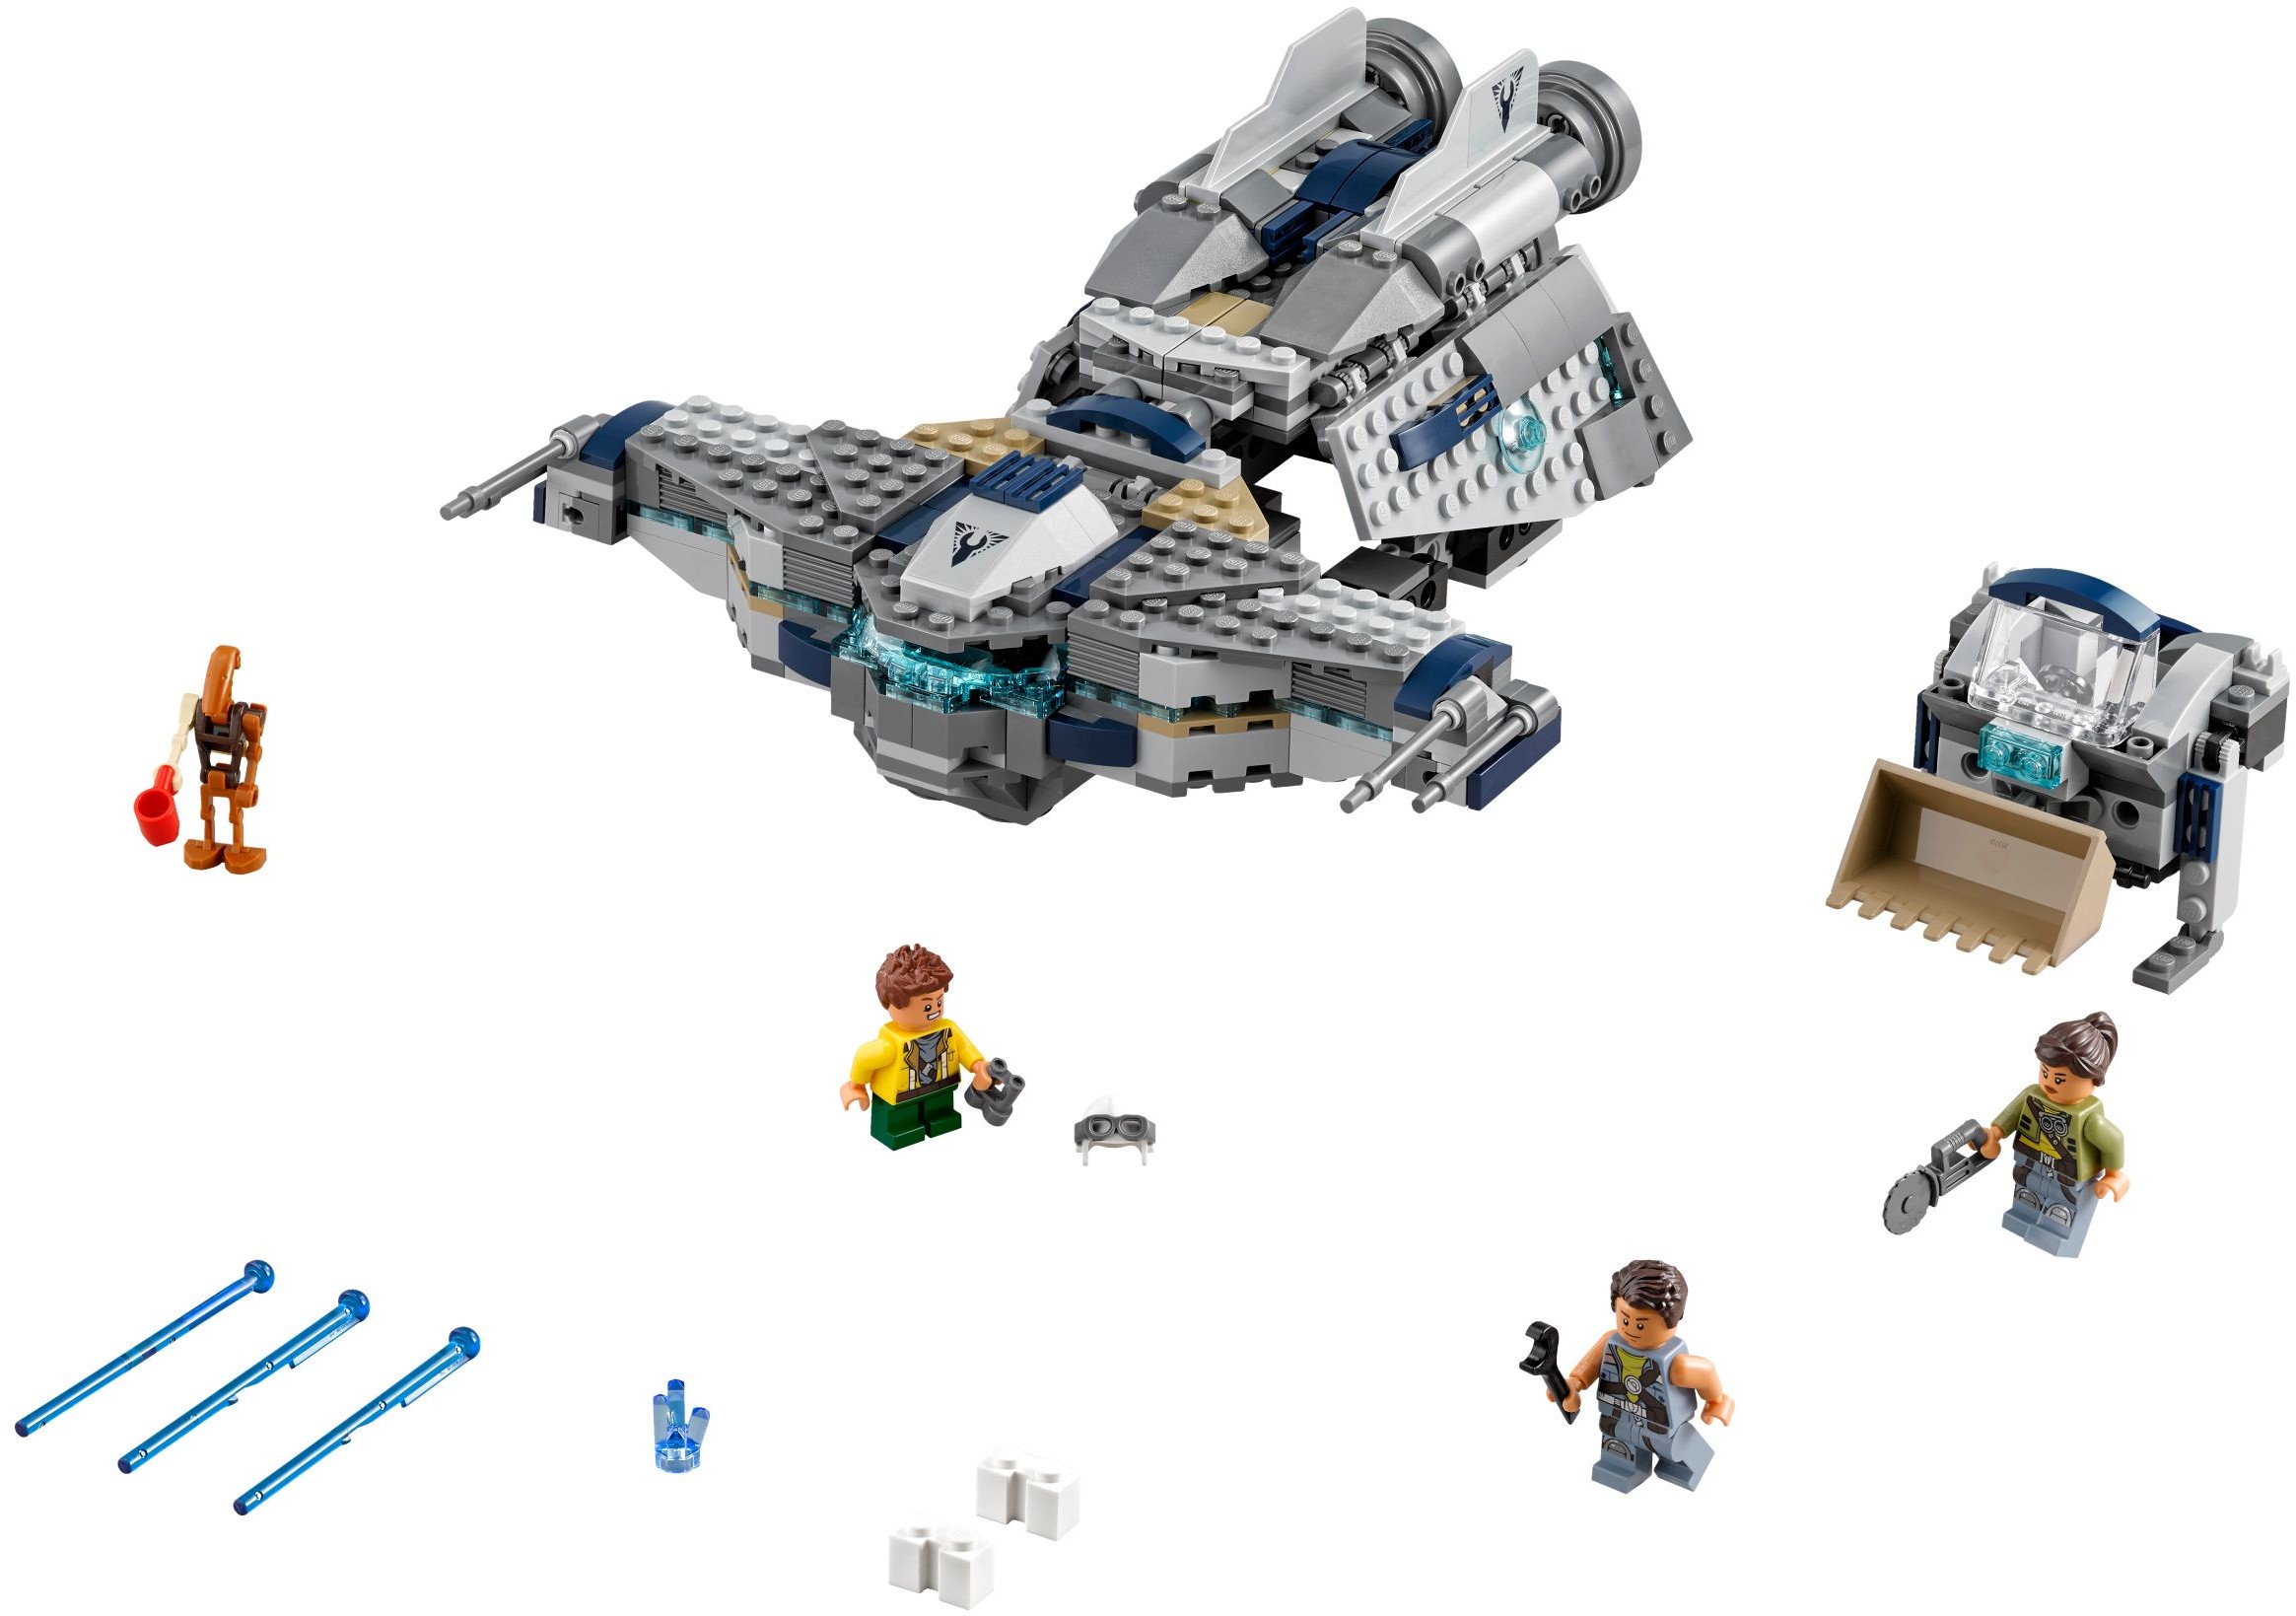 Sand Blue Legs Minifigure SW0755 LEGO Star Wars The Freemaker Adventures Kordi